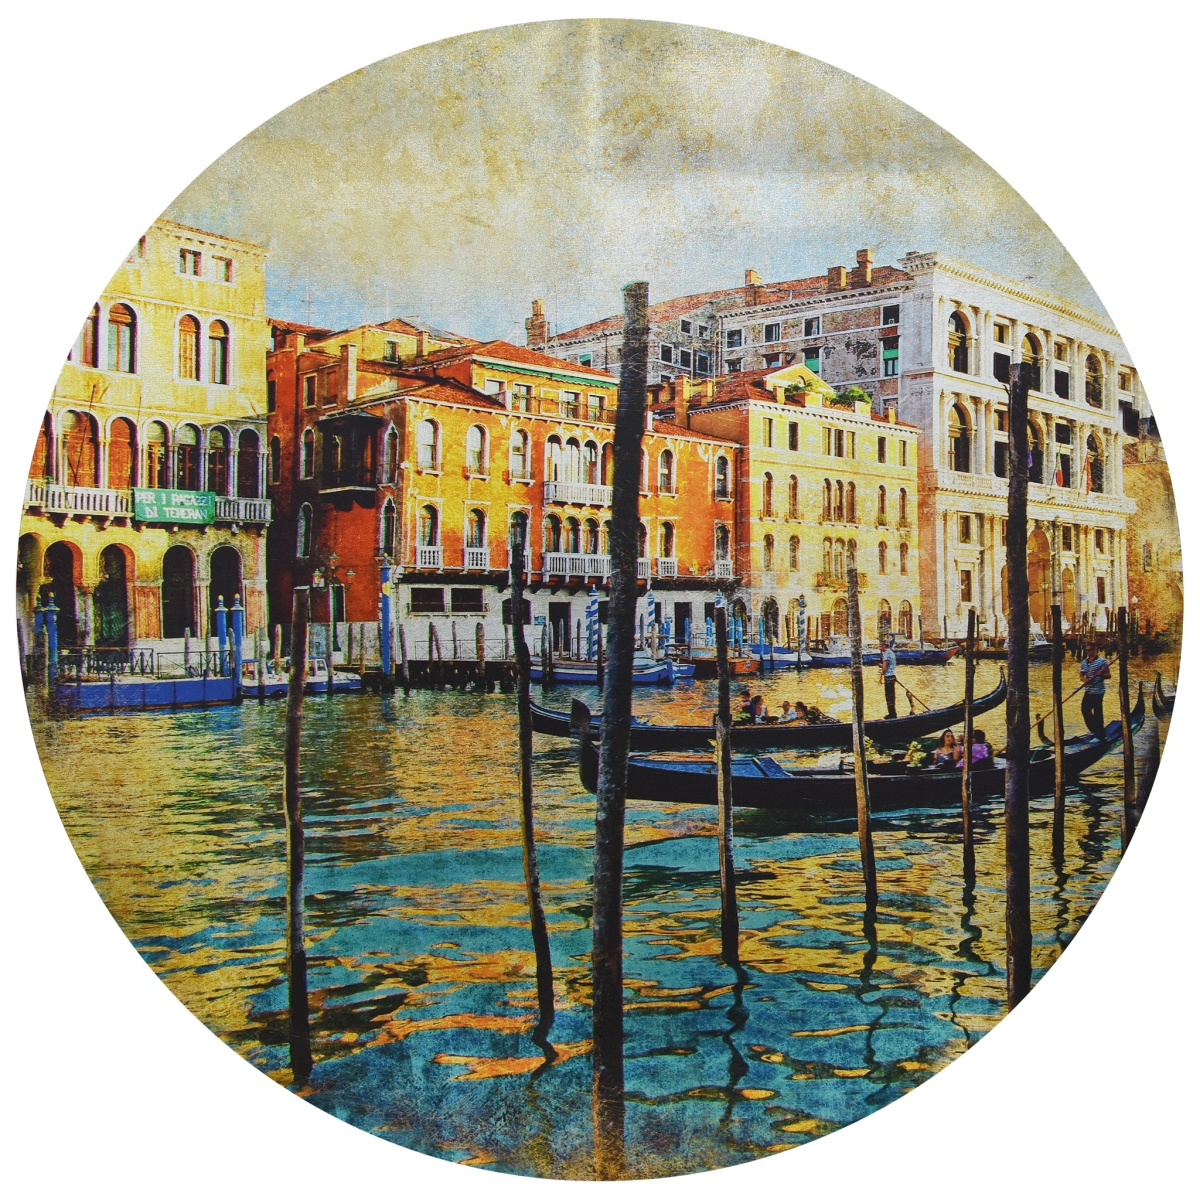 Scgr-ead0398-32 32 In. Venice Circular Silver Canvas Giclee Printed Wall Art